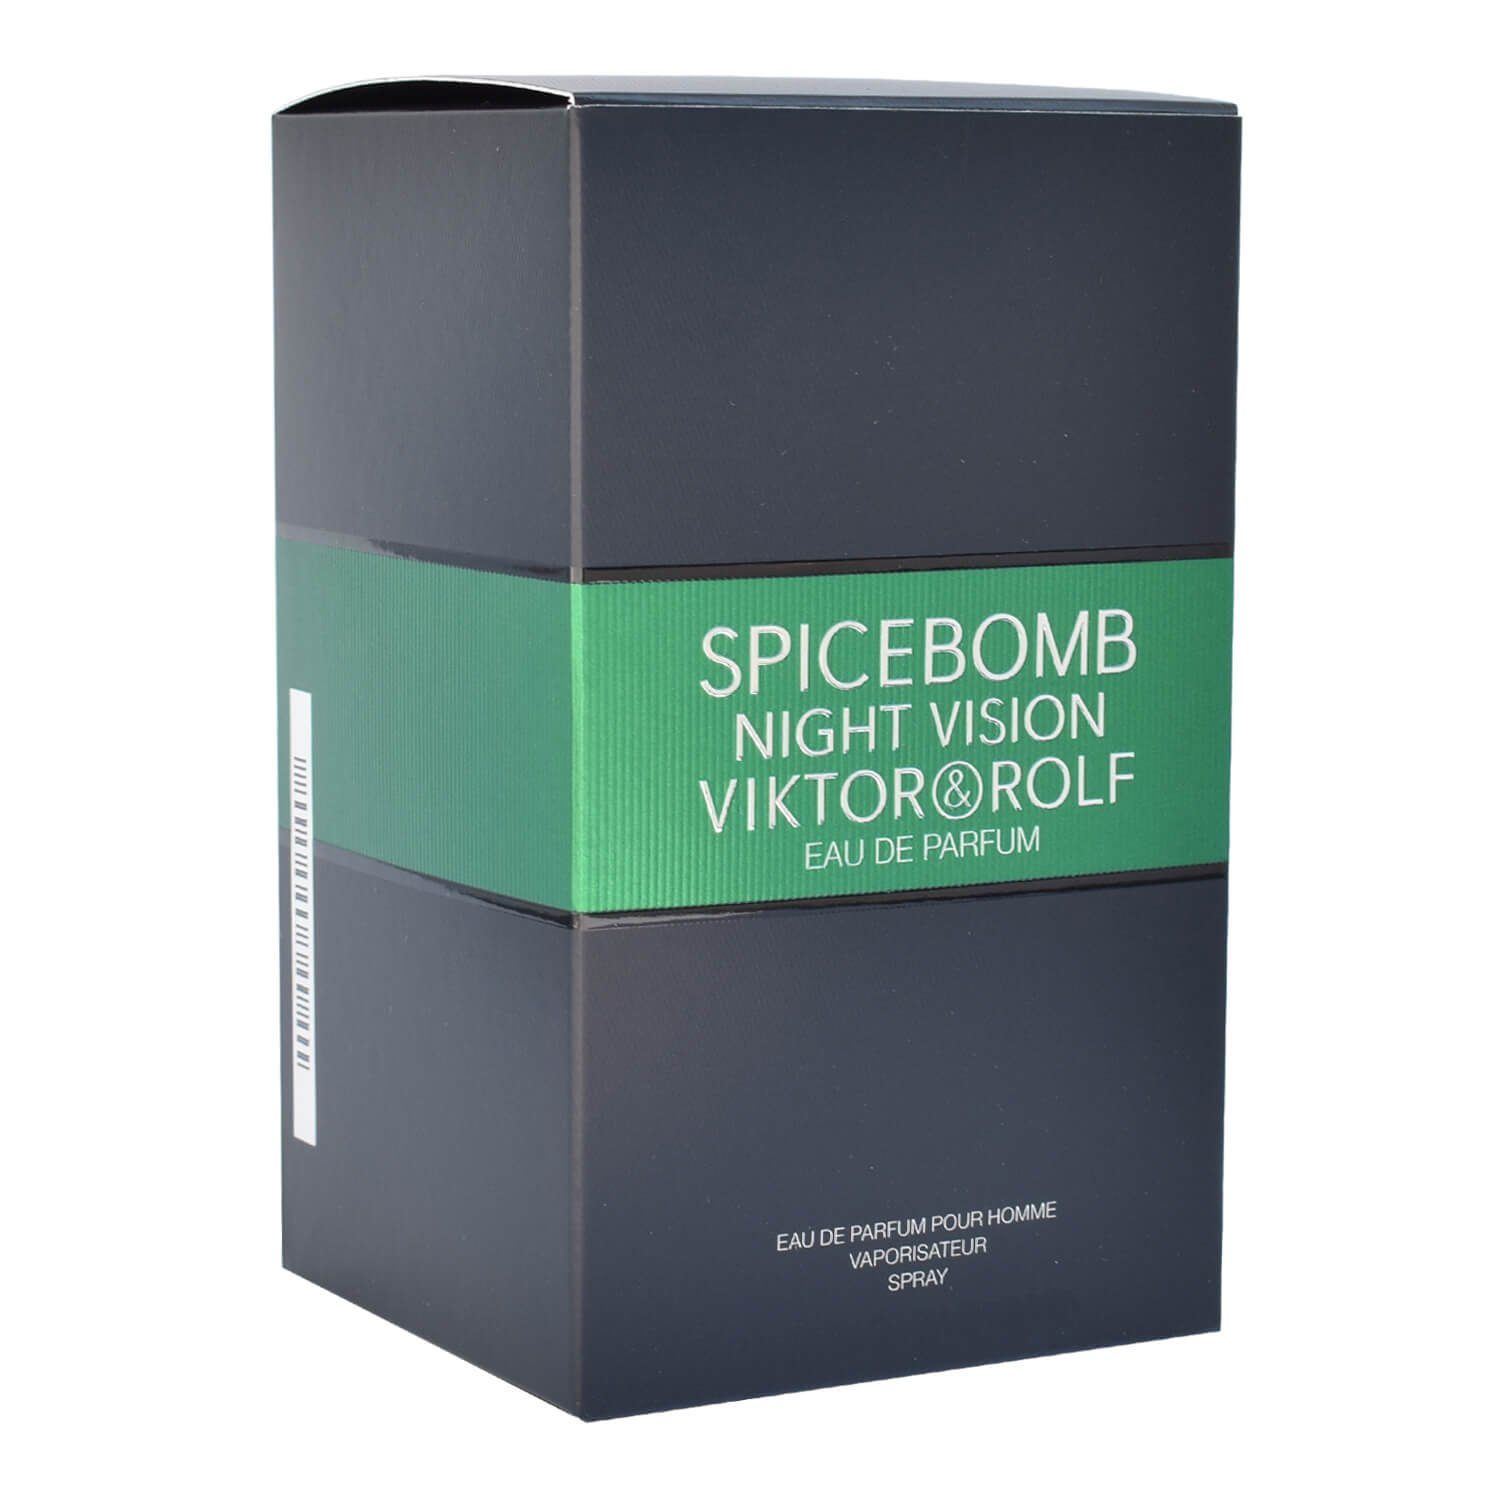 ml Viktor de Rolf Spicebomb EDP 50 & Vision Night Parfum Eau